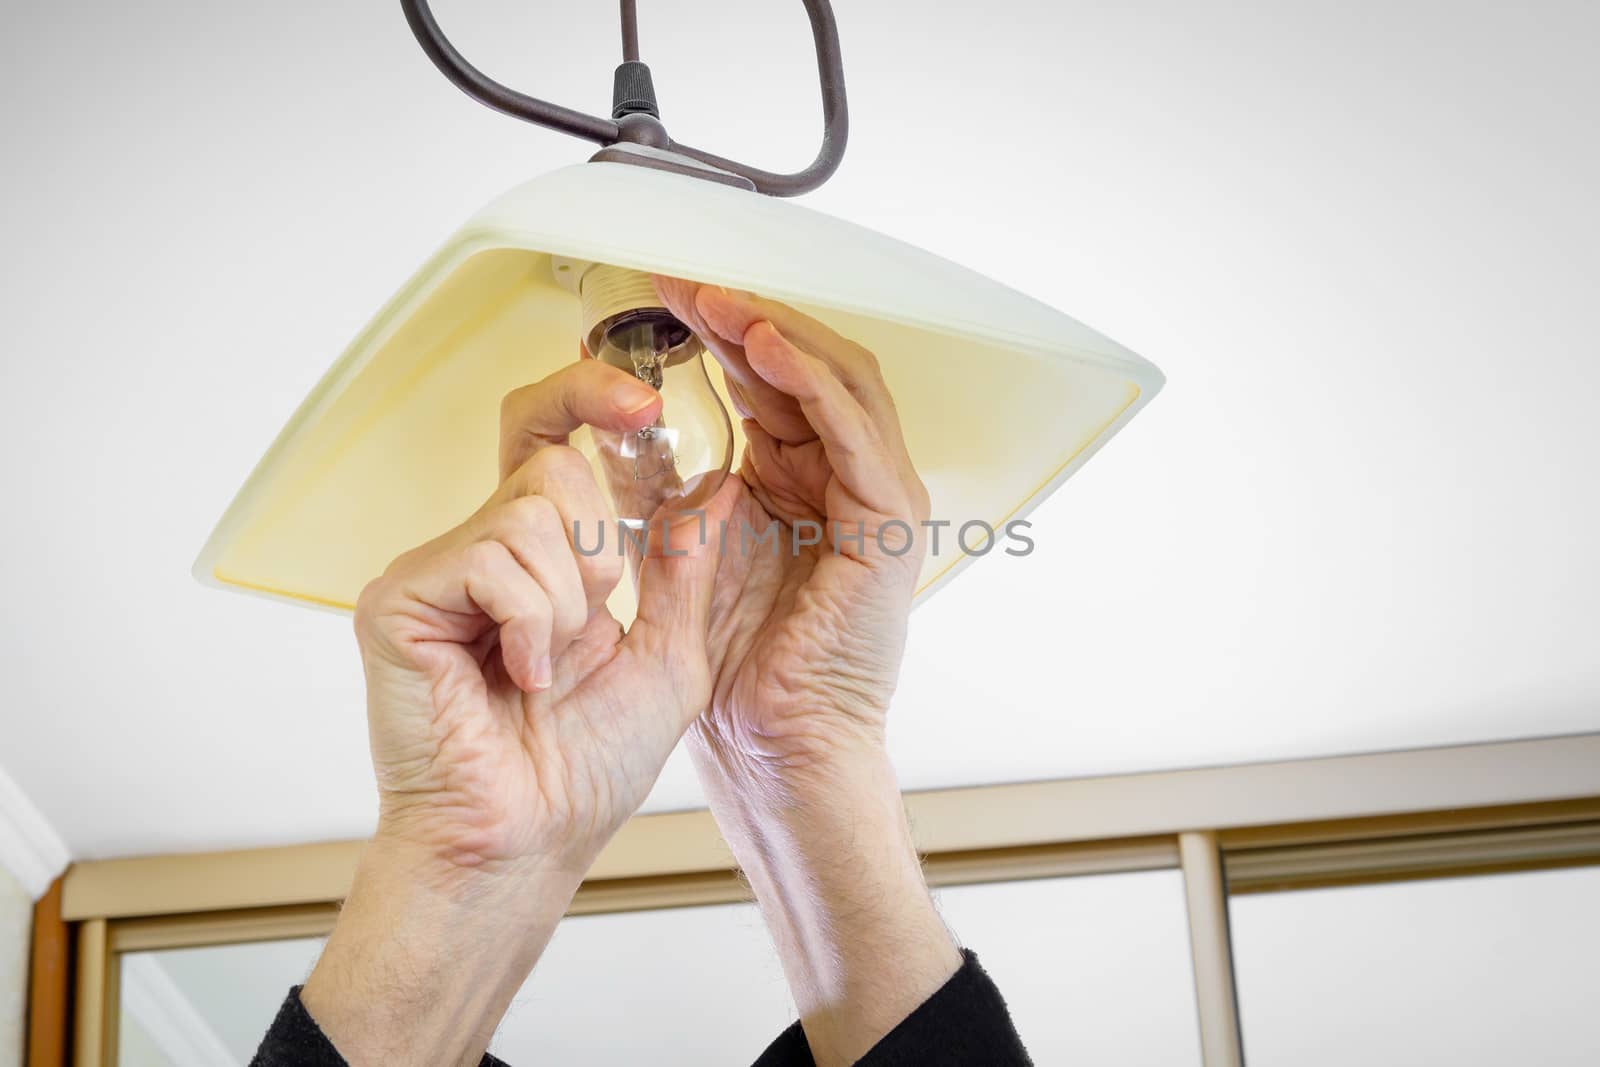 Man Installing a Bulb by MaxalTamor